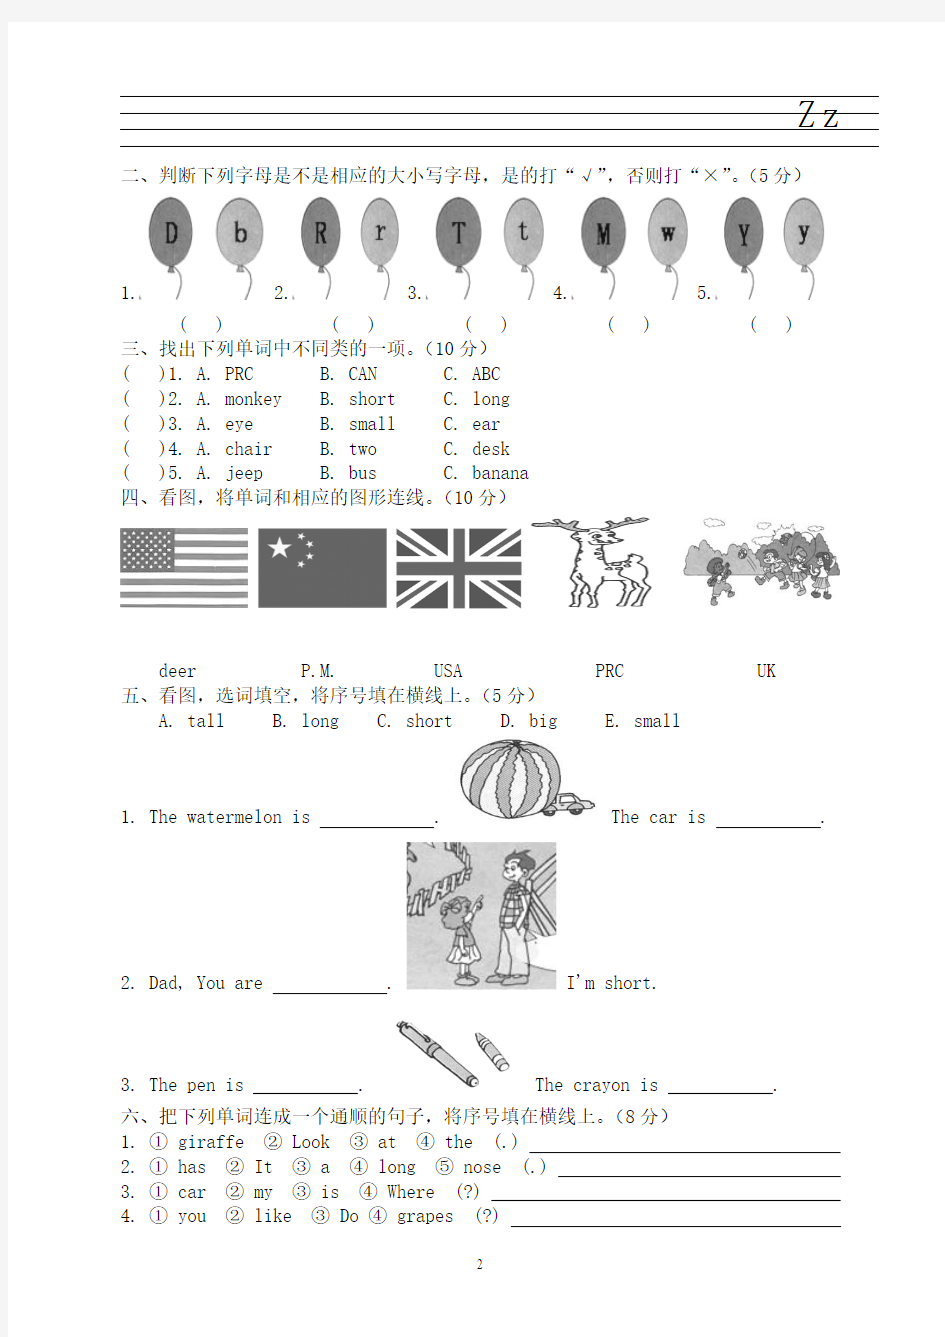 PEP小学英语三年级下册第六单元测试题Unit6(含听力材料)